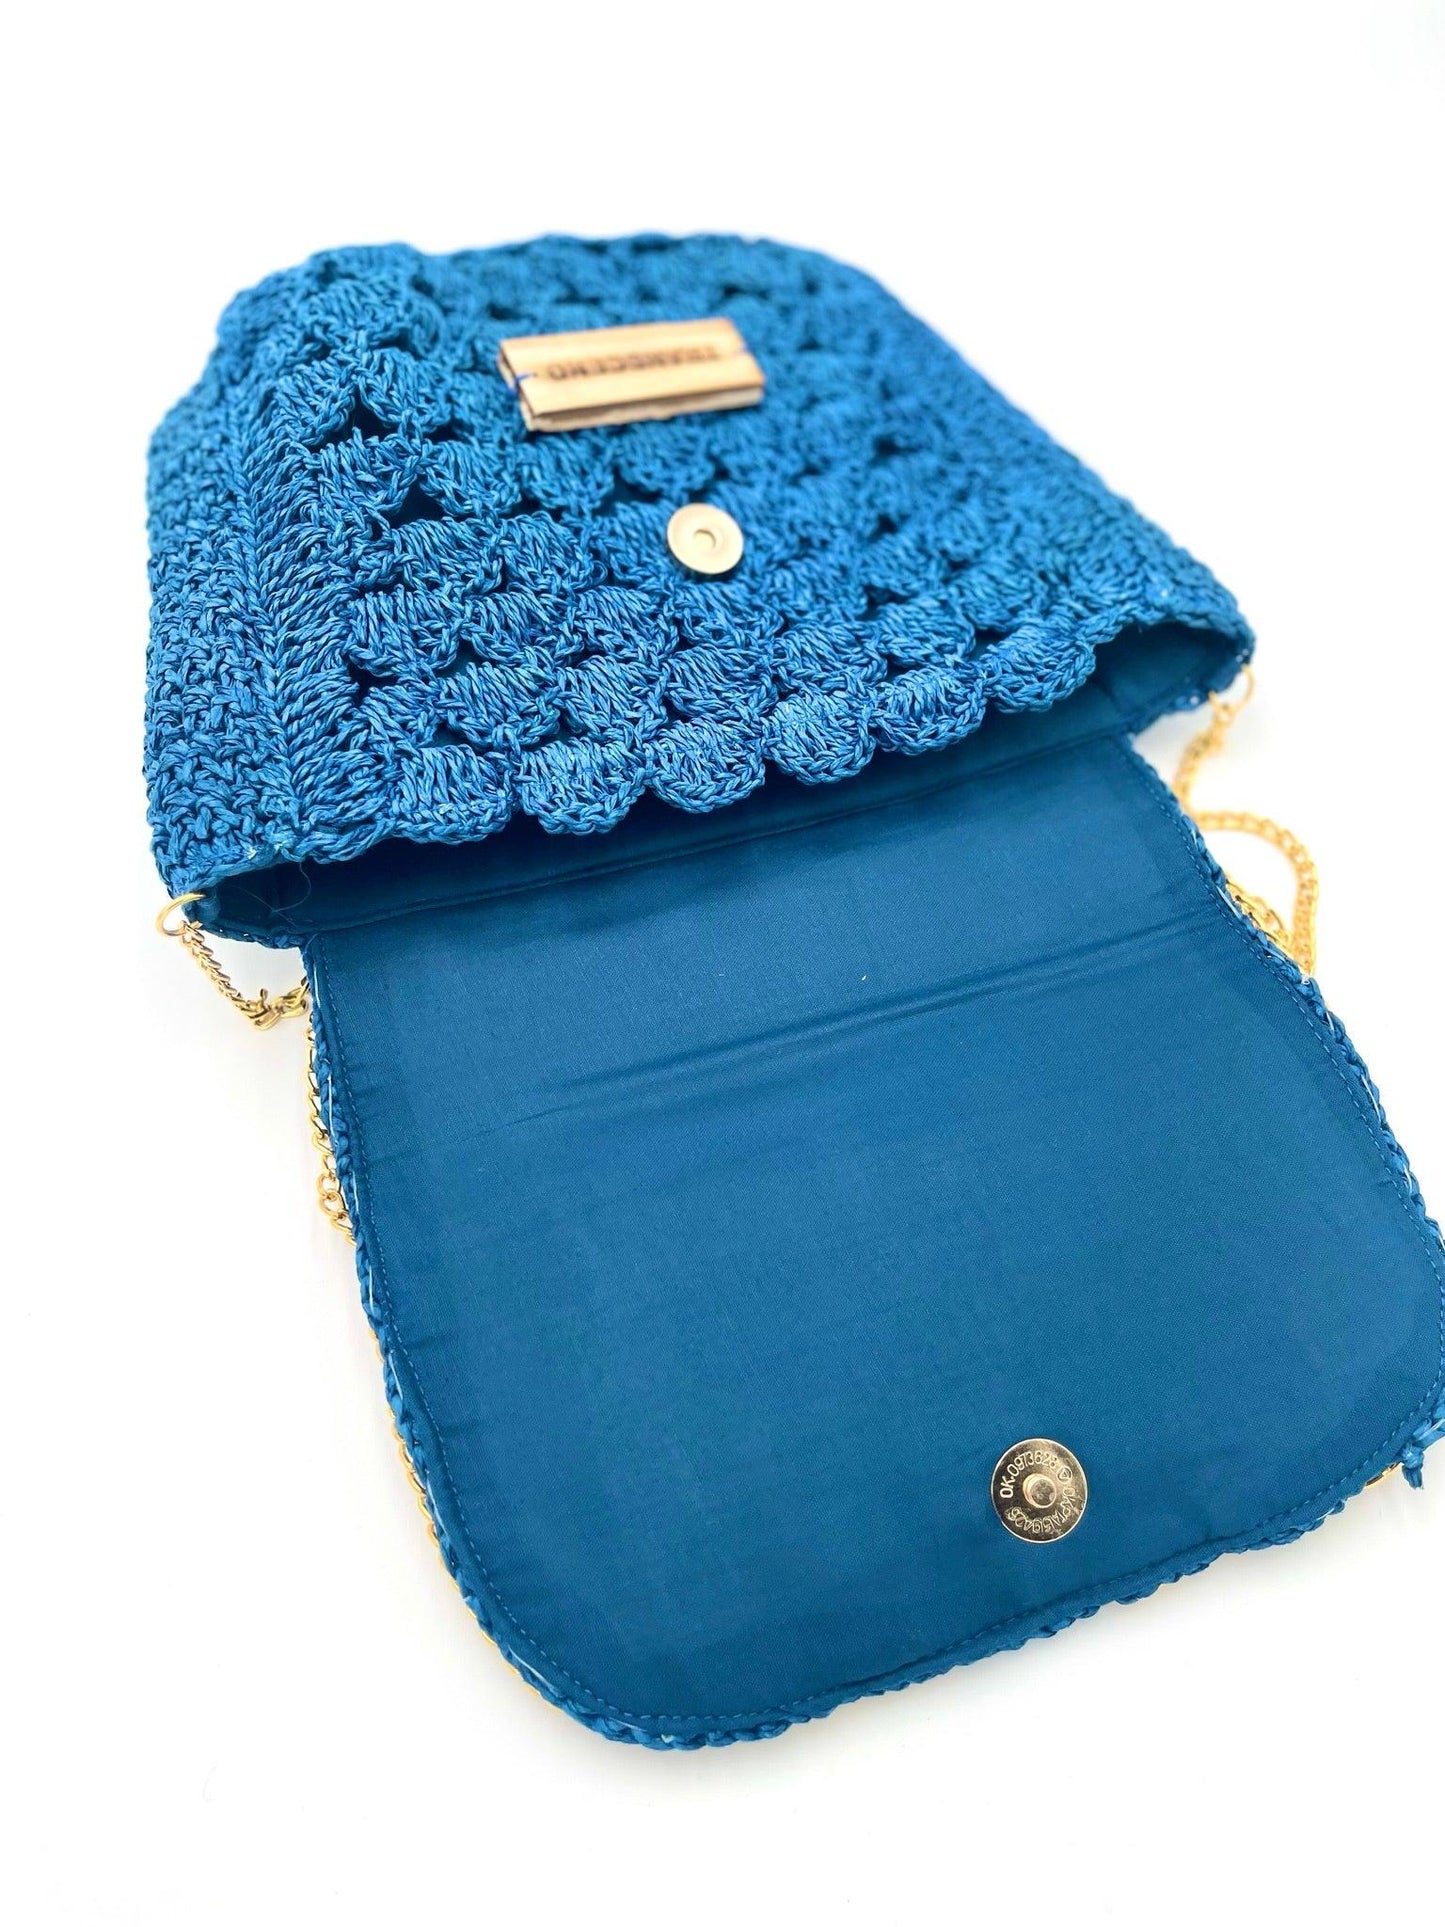 SERENA | Handwoven Natural Raffia Flap Bag / Crossbody in Blue and Green Colors - Transcend